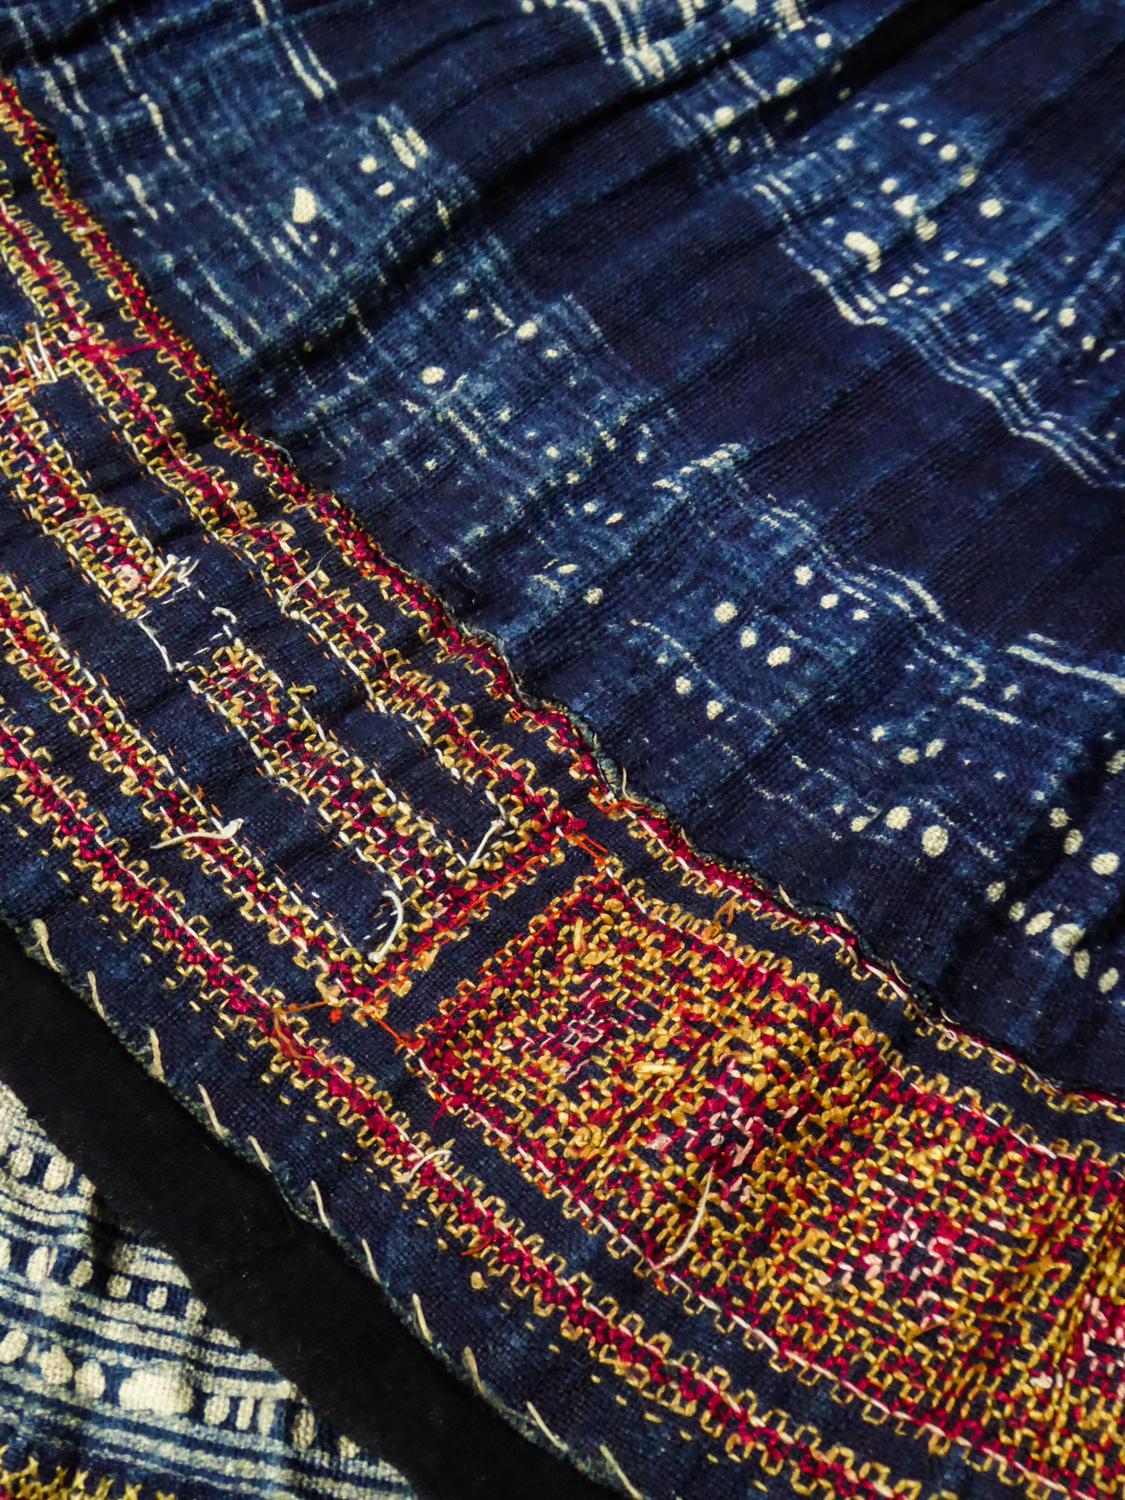 Miao - Hmong Pleated Skirt - Thailand Circa 1950 4